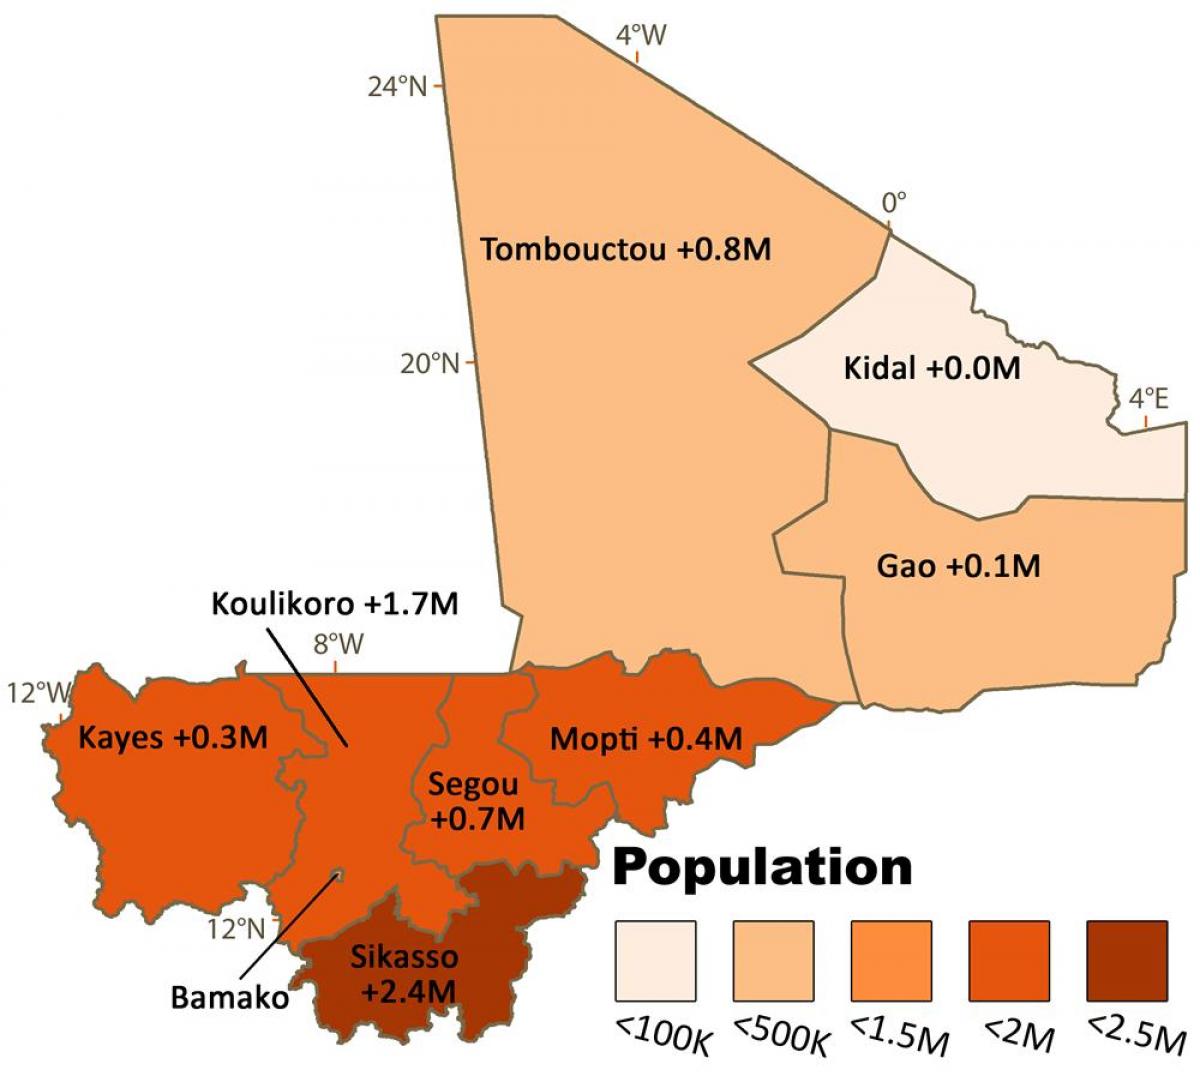 Карта на Мали население